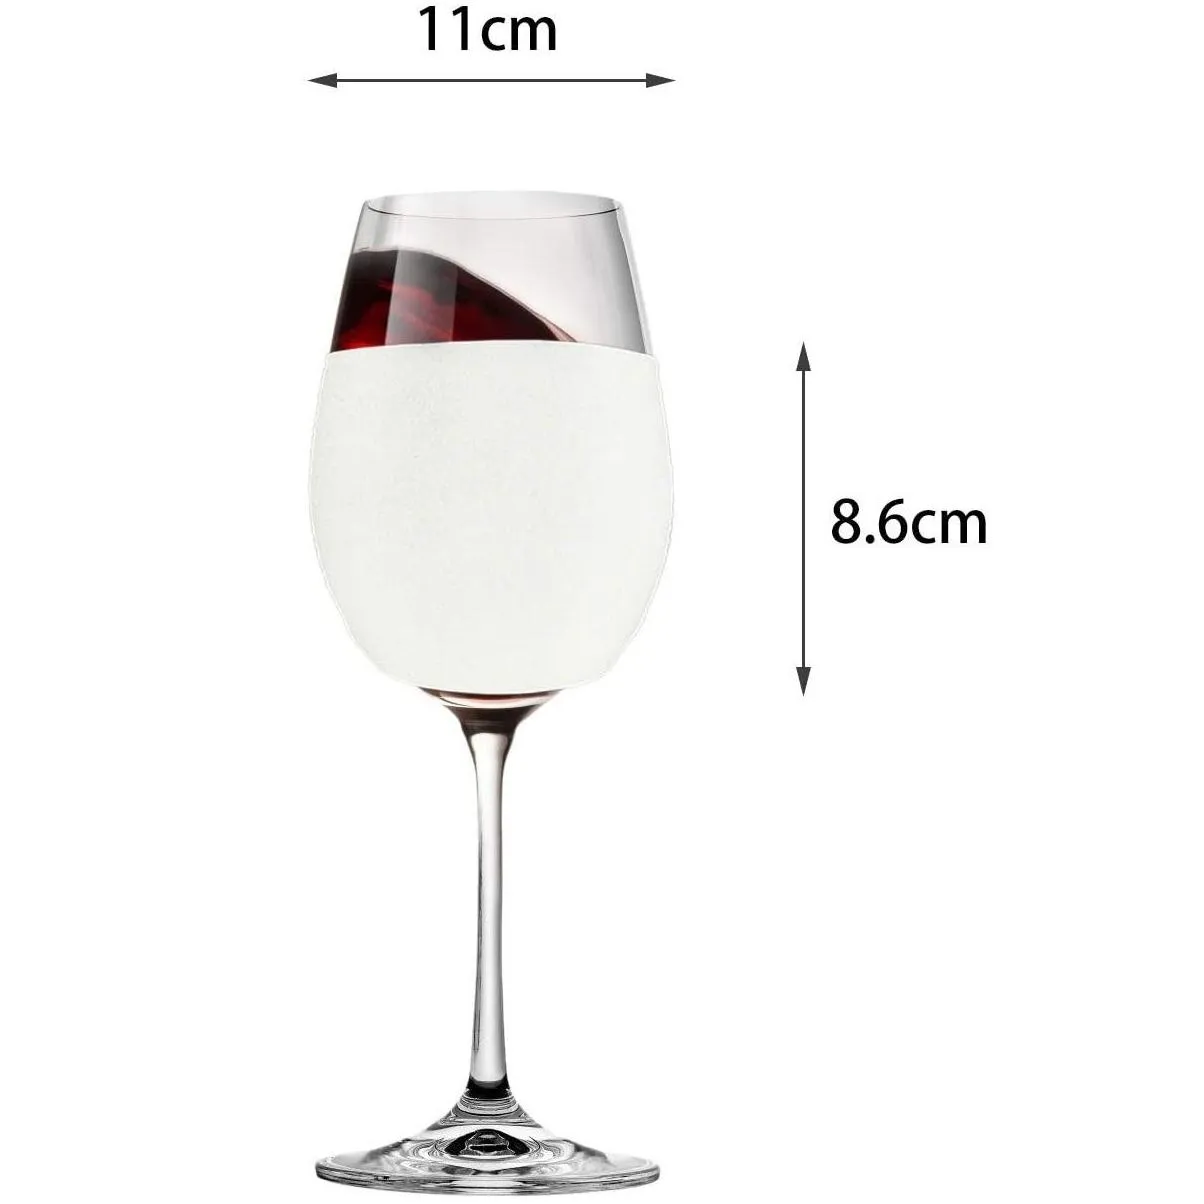 sublimation blanks wine glass sleeve neoprene insulator heat press insulator cover for redwine glasses